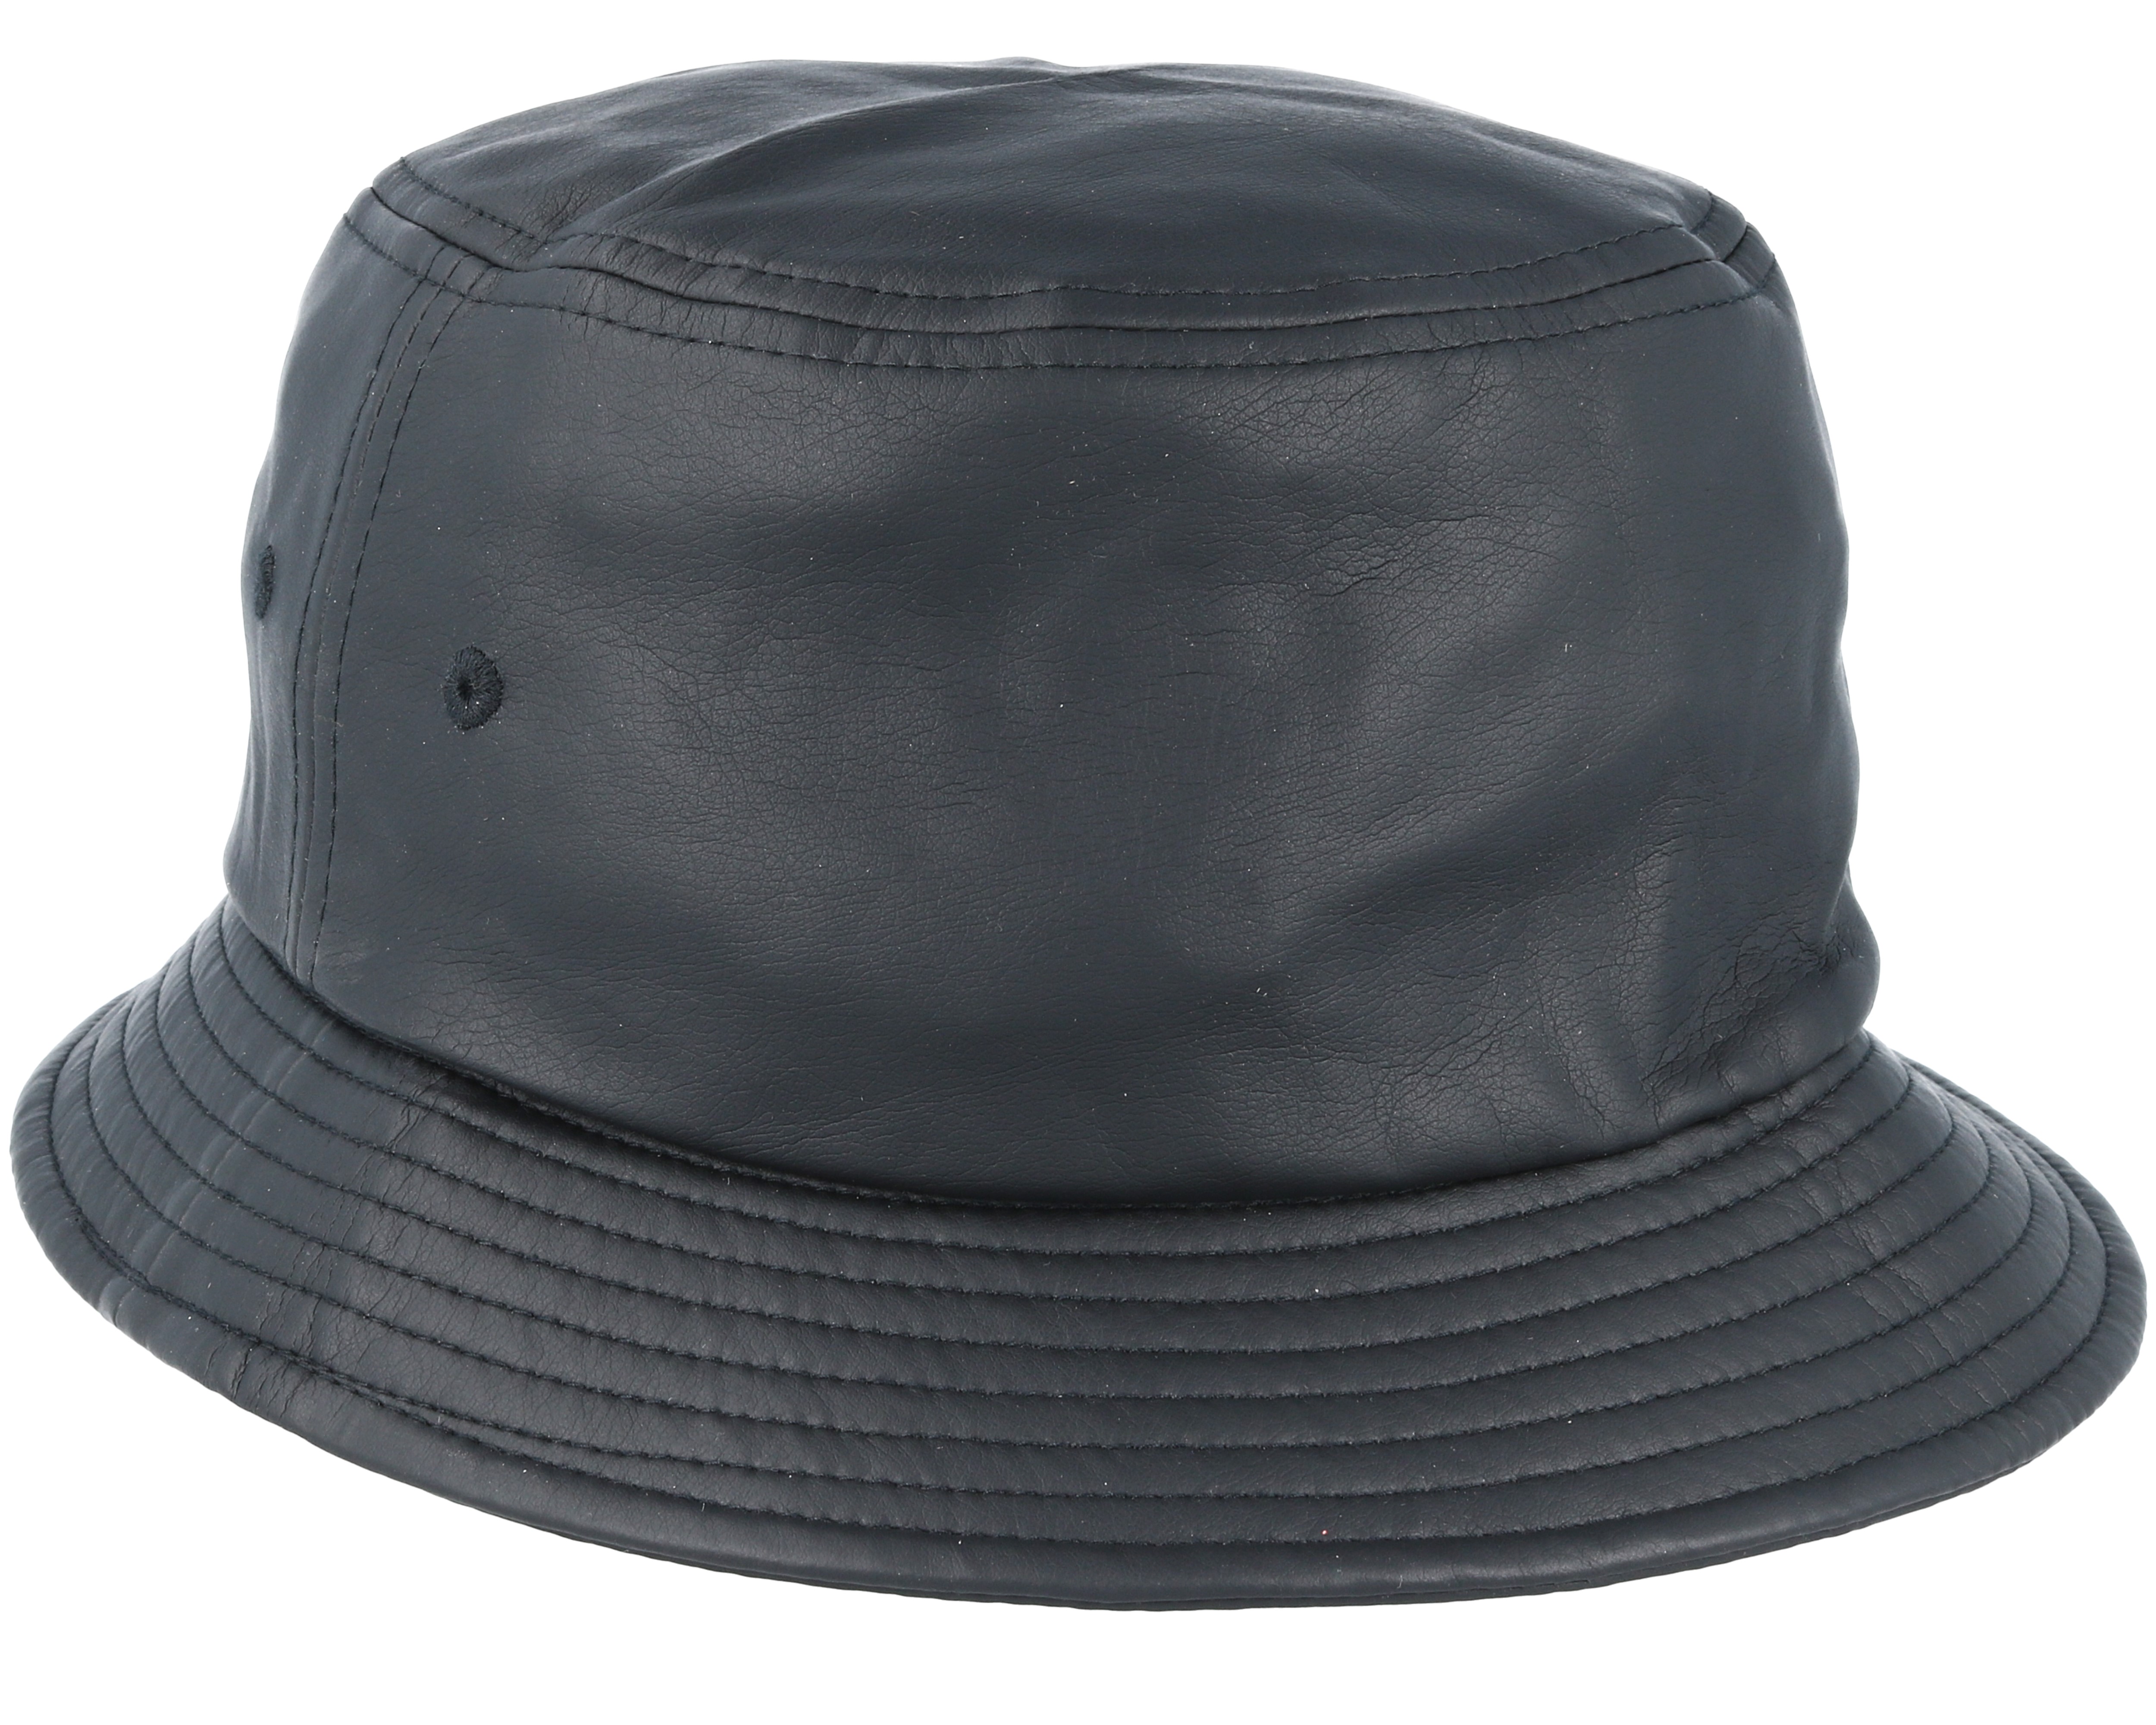 Full leather imitation Black Bucket - Yupoong hats | Hatstore.co.uk